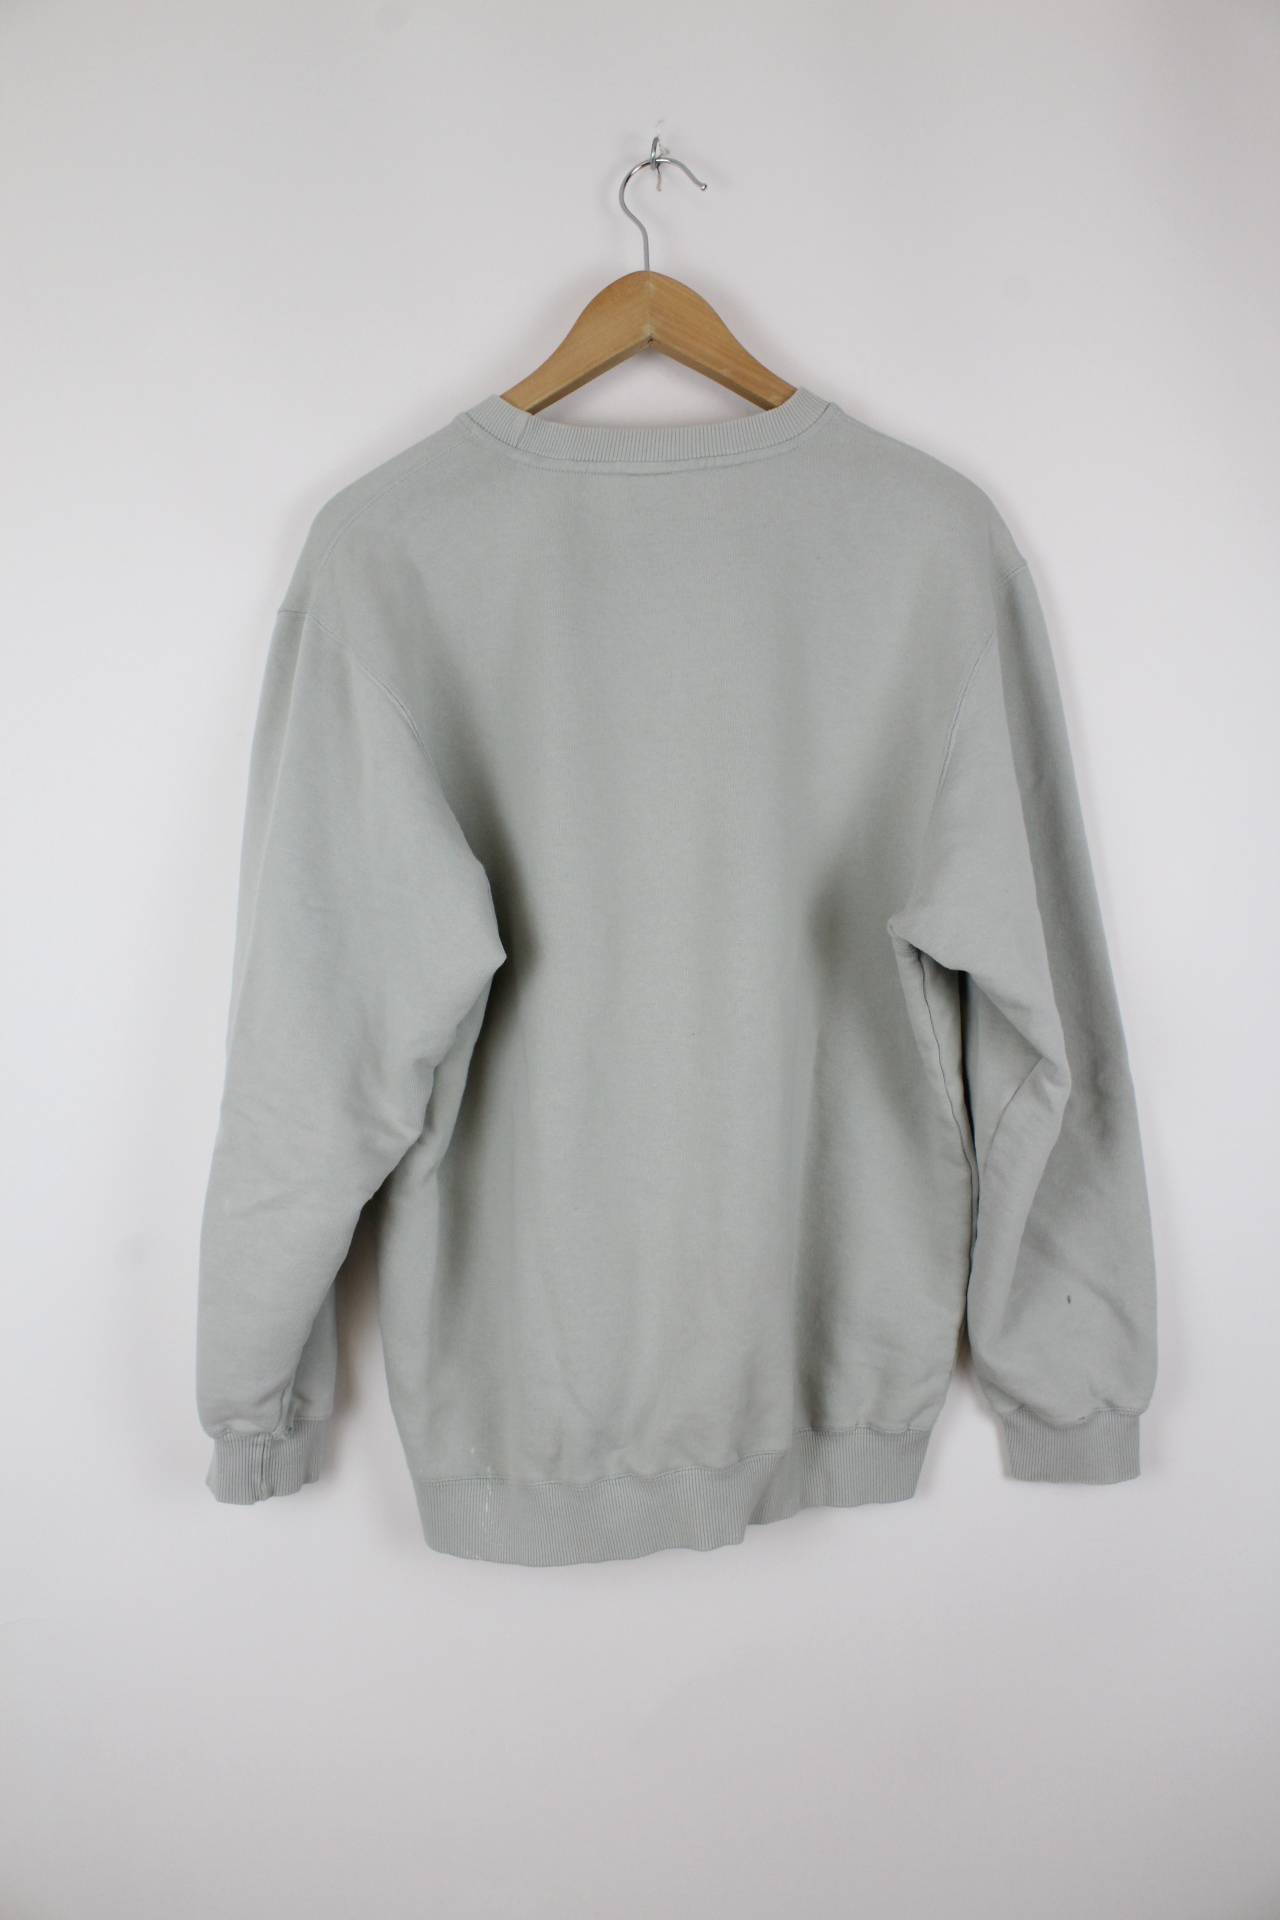 Vintage Adidas Sweater Beige - L